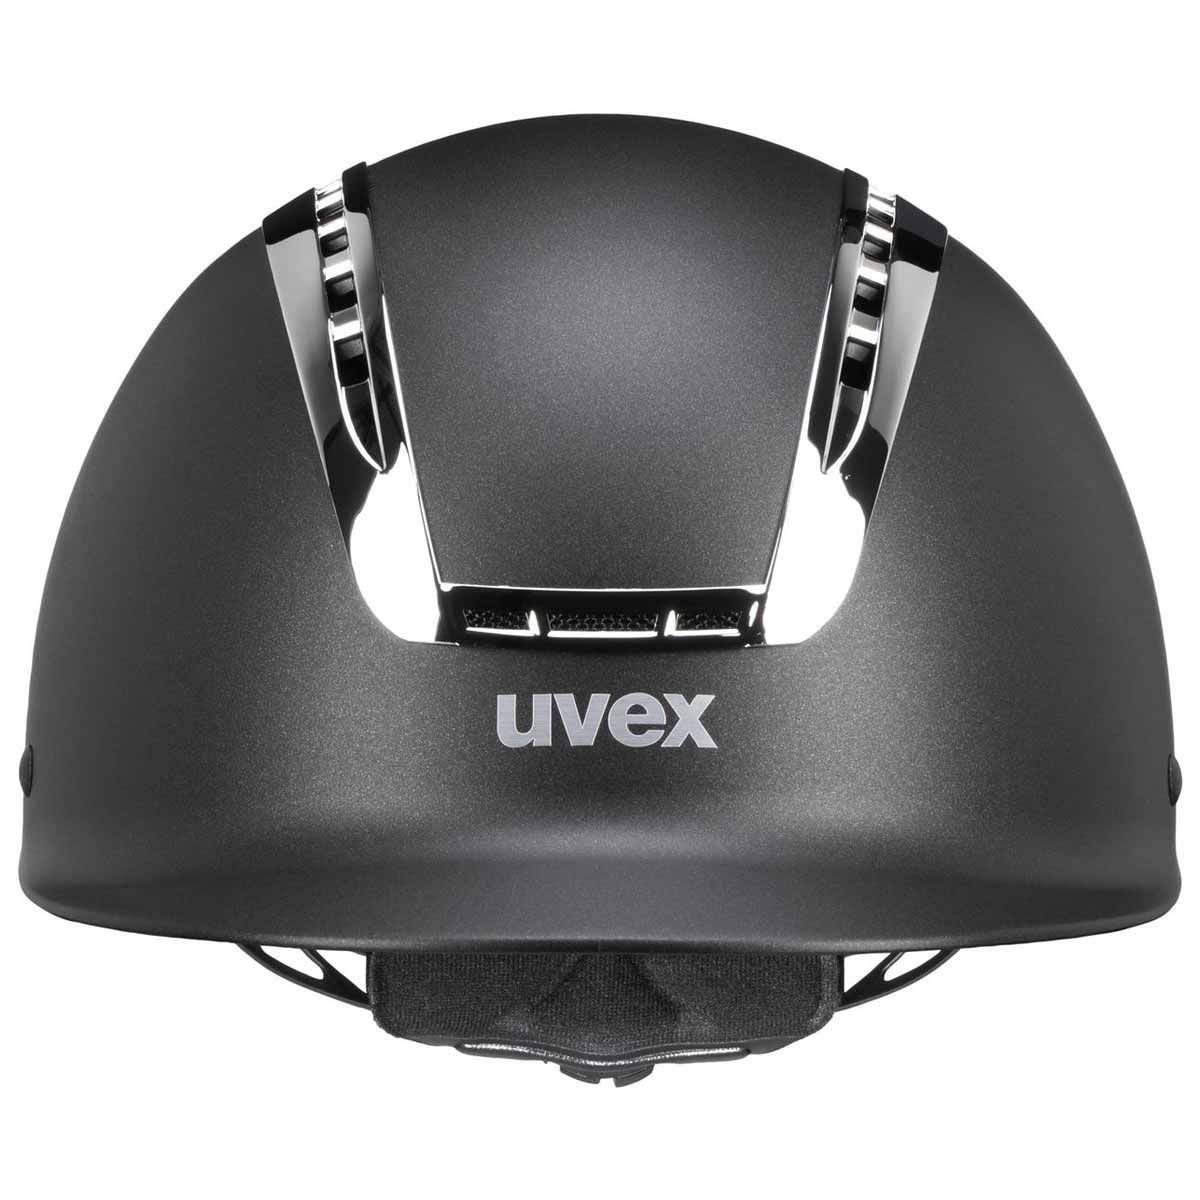 uvex suxxeed chrome riding helmet black mat - silver M/L